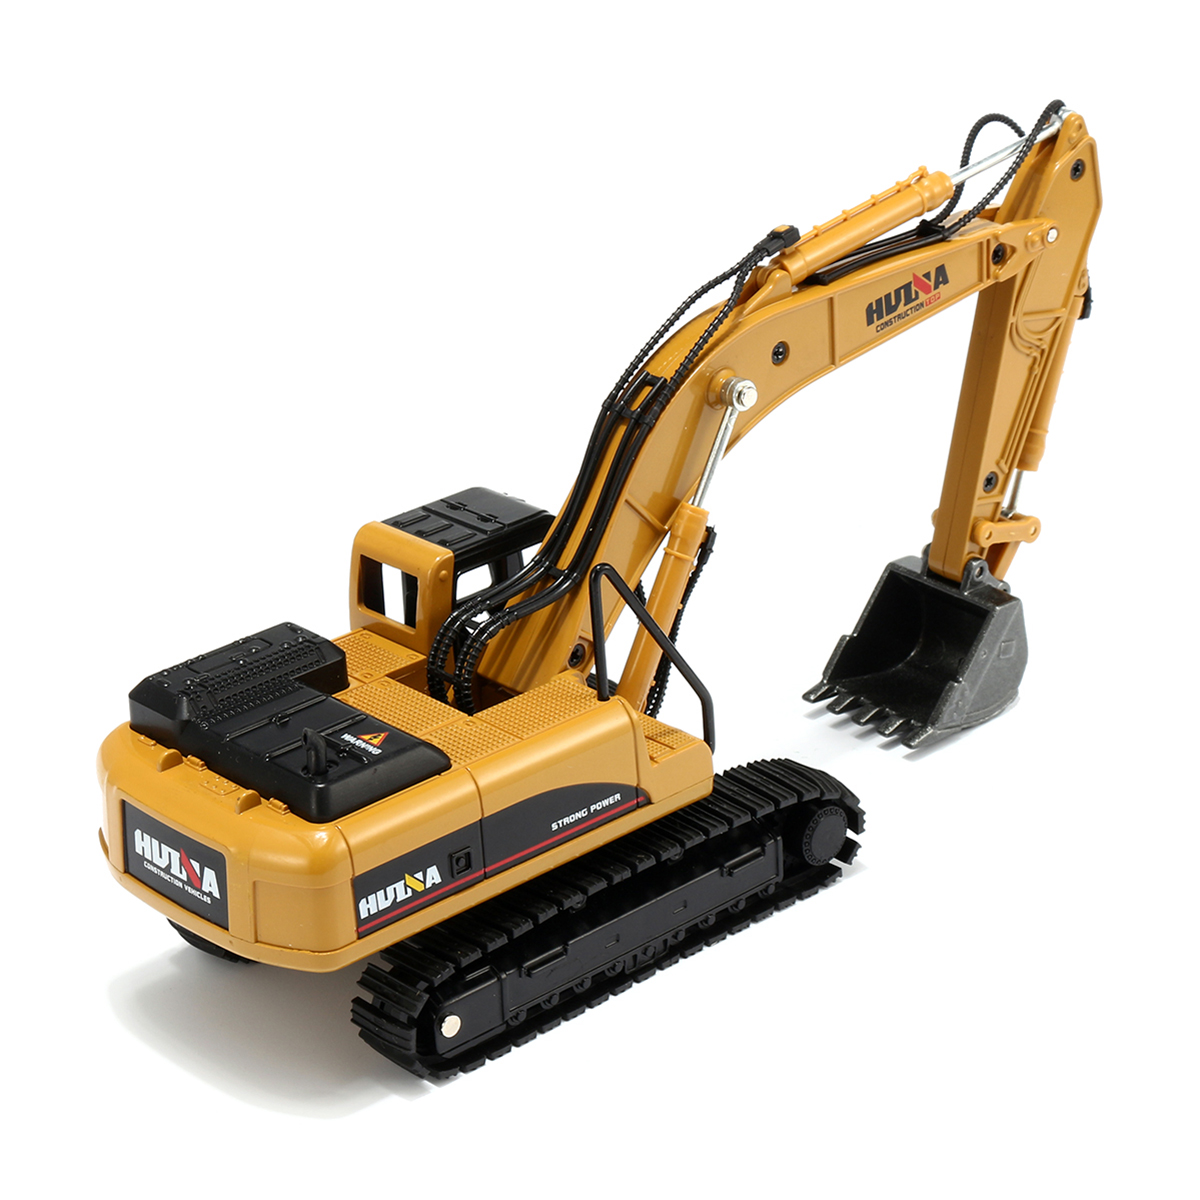 150-Alloy-Excavator-Toys-Engineering-Vehicle-Diecast-Model-Metal-Castings-Vehicles-1327403-5